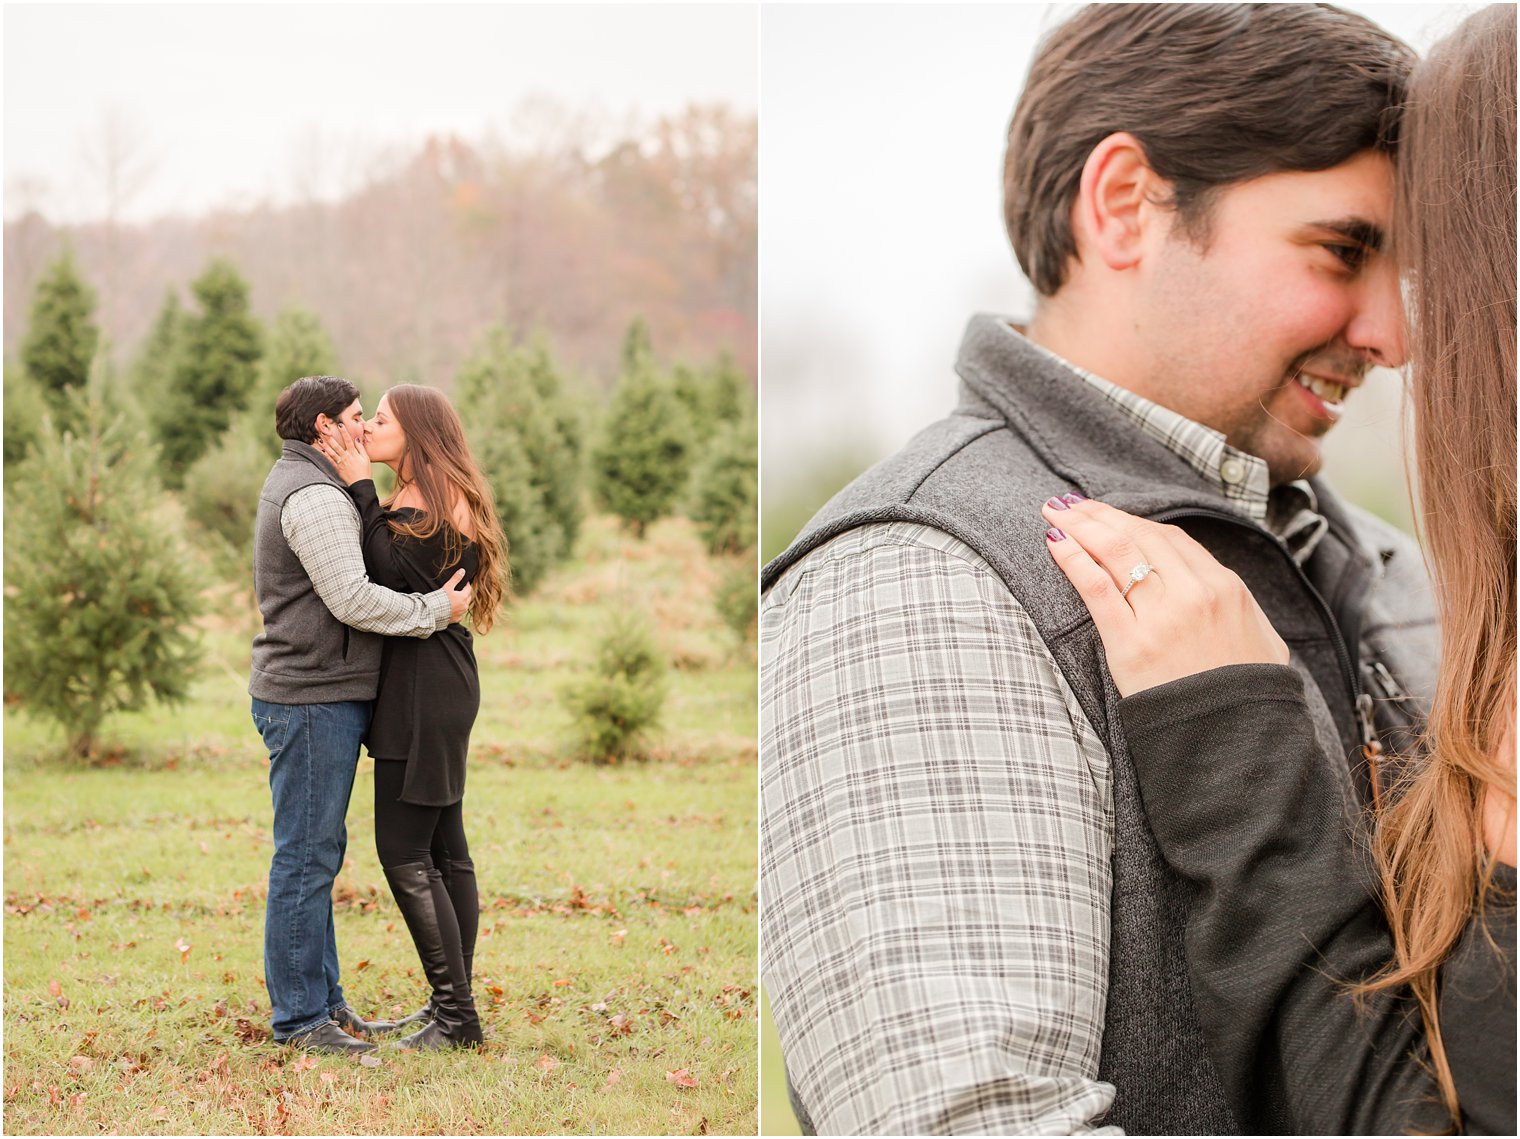 Romantic engagement photos at Ann Ellen Farm in Manalapan, NJ